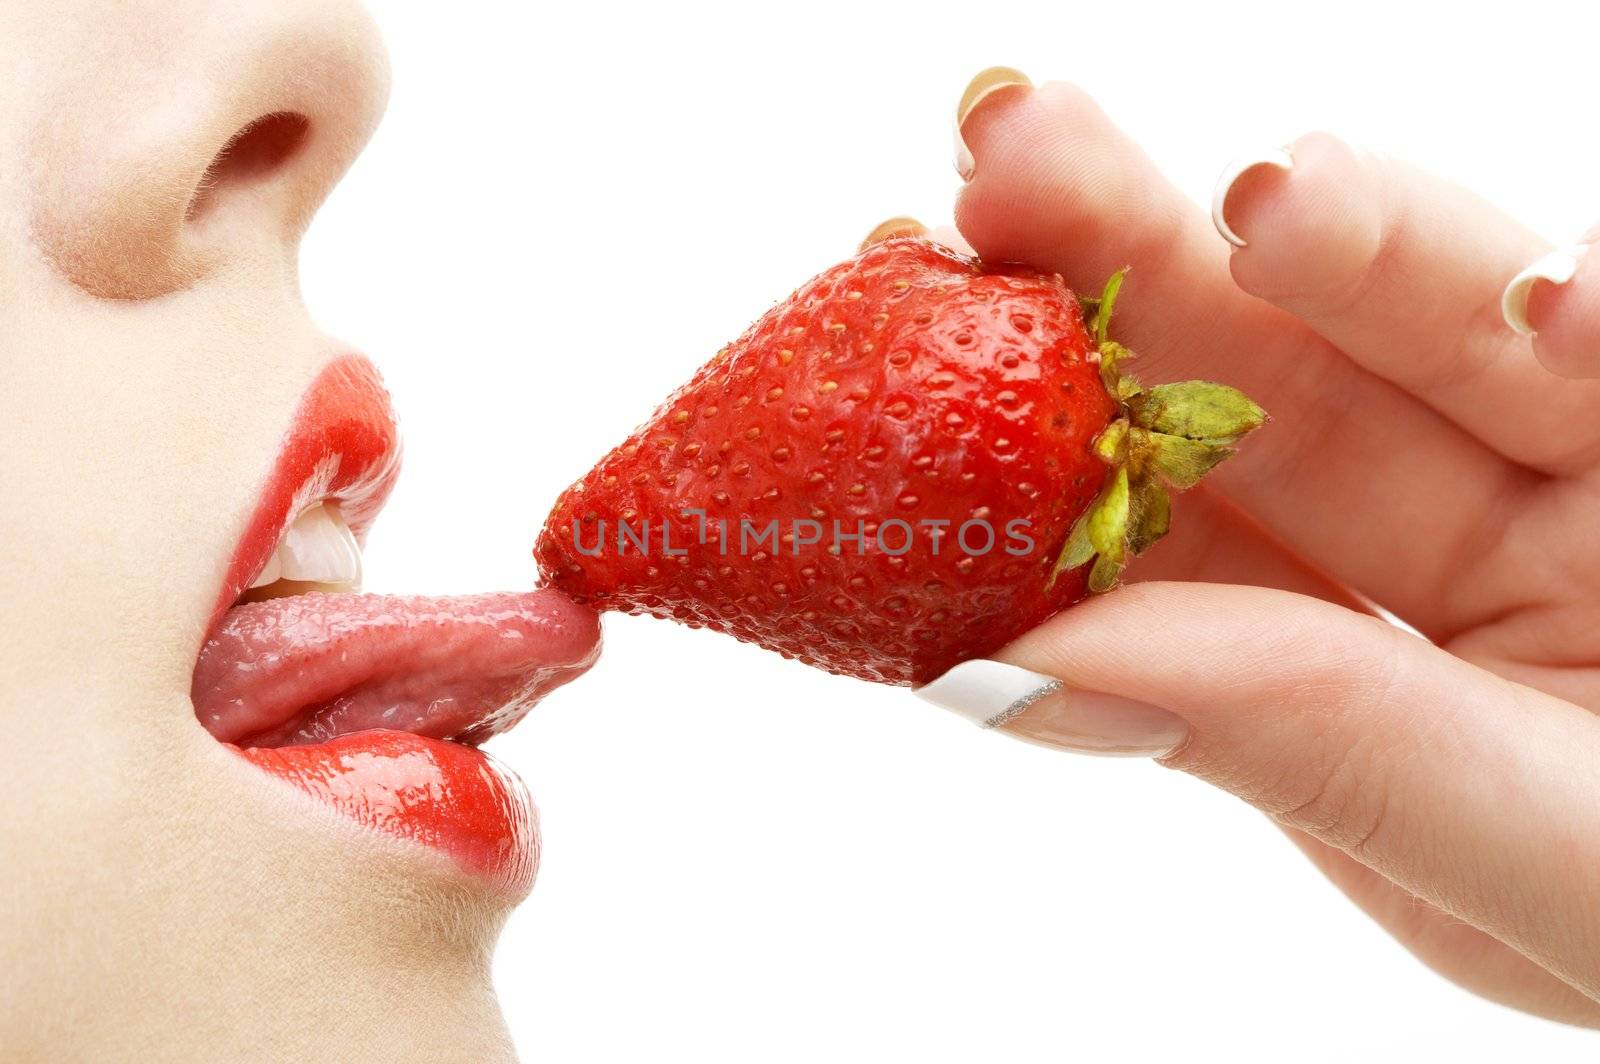 strawberry, lips and tongue by dolgachov